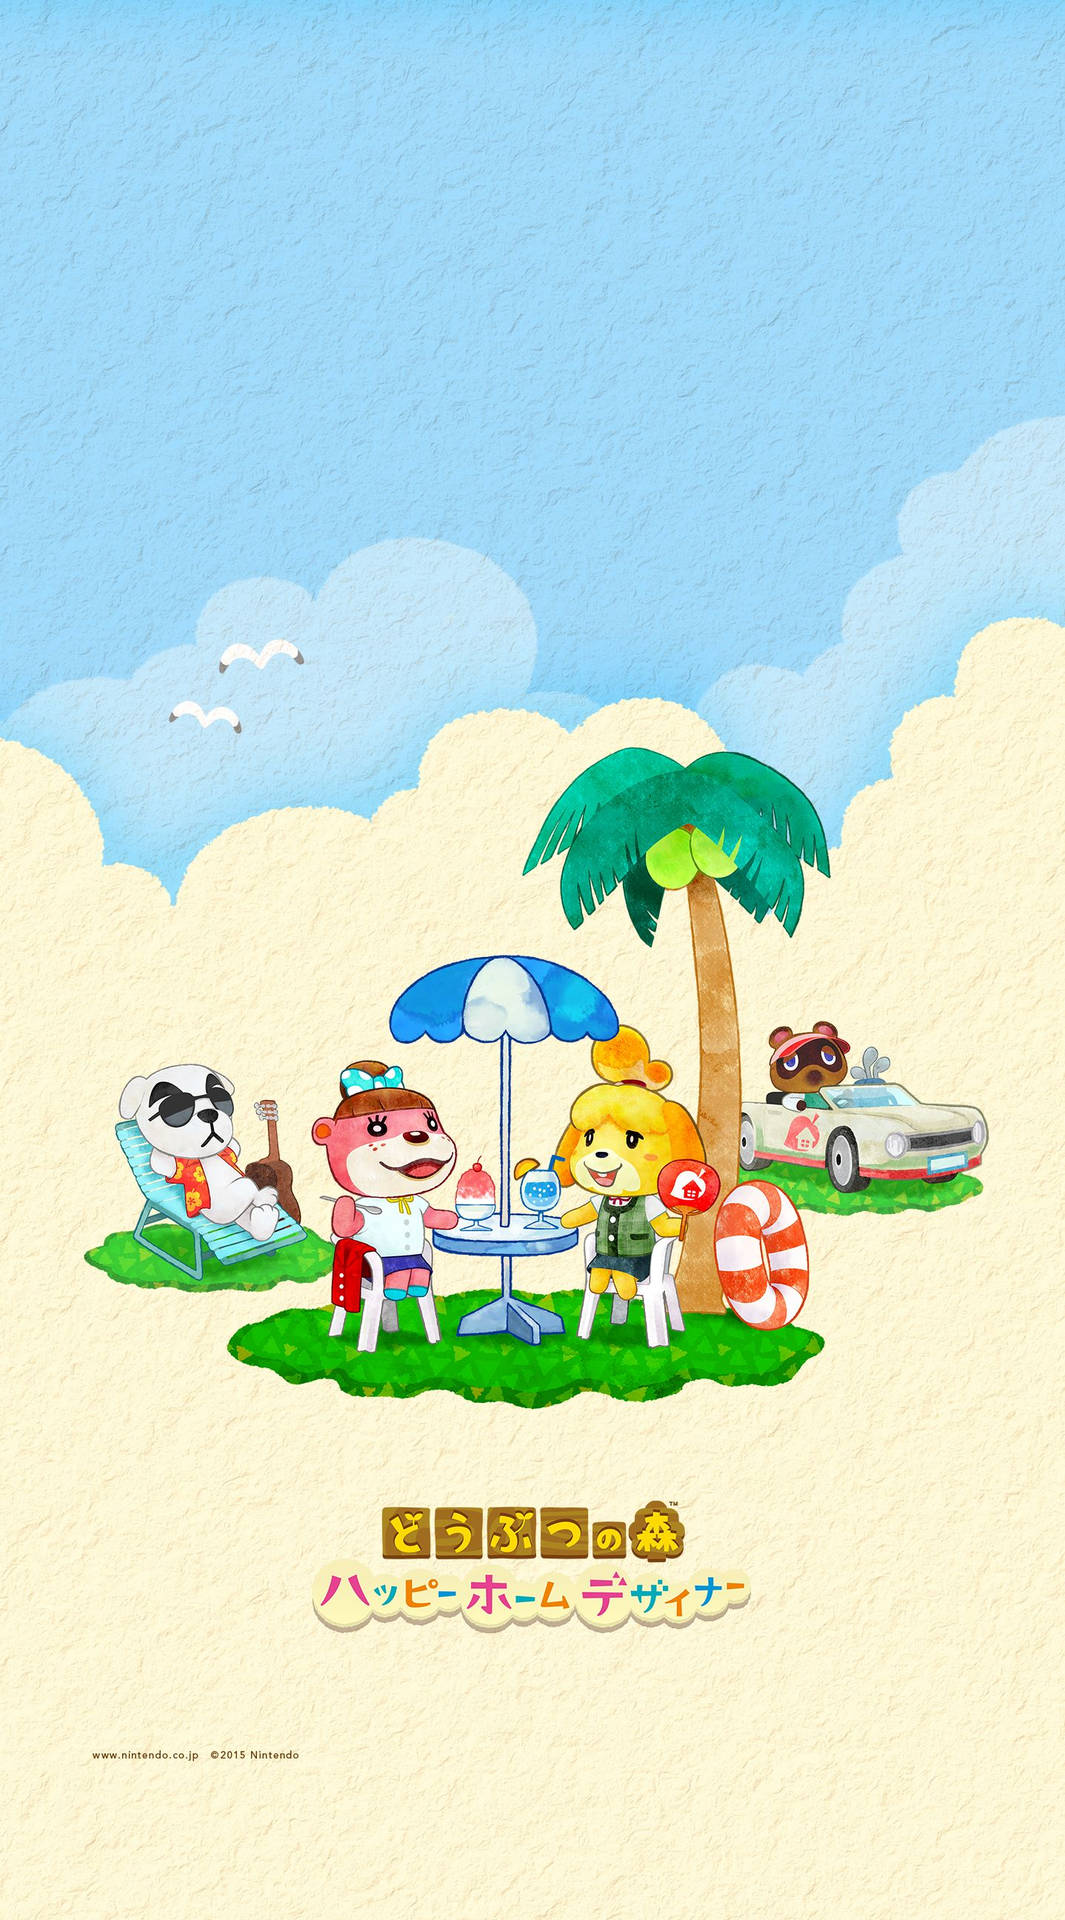 Free Animal Crossing Wallpaper Downloads, [100+] Animal Crossing Wallpapers  for FREE 